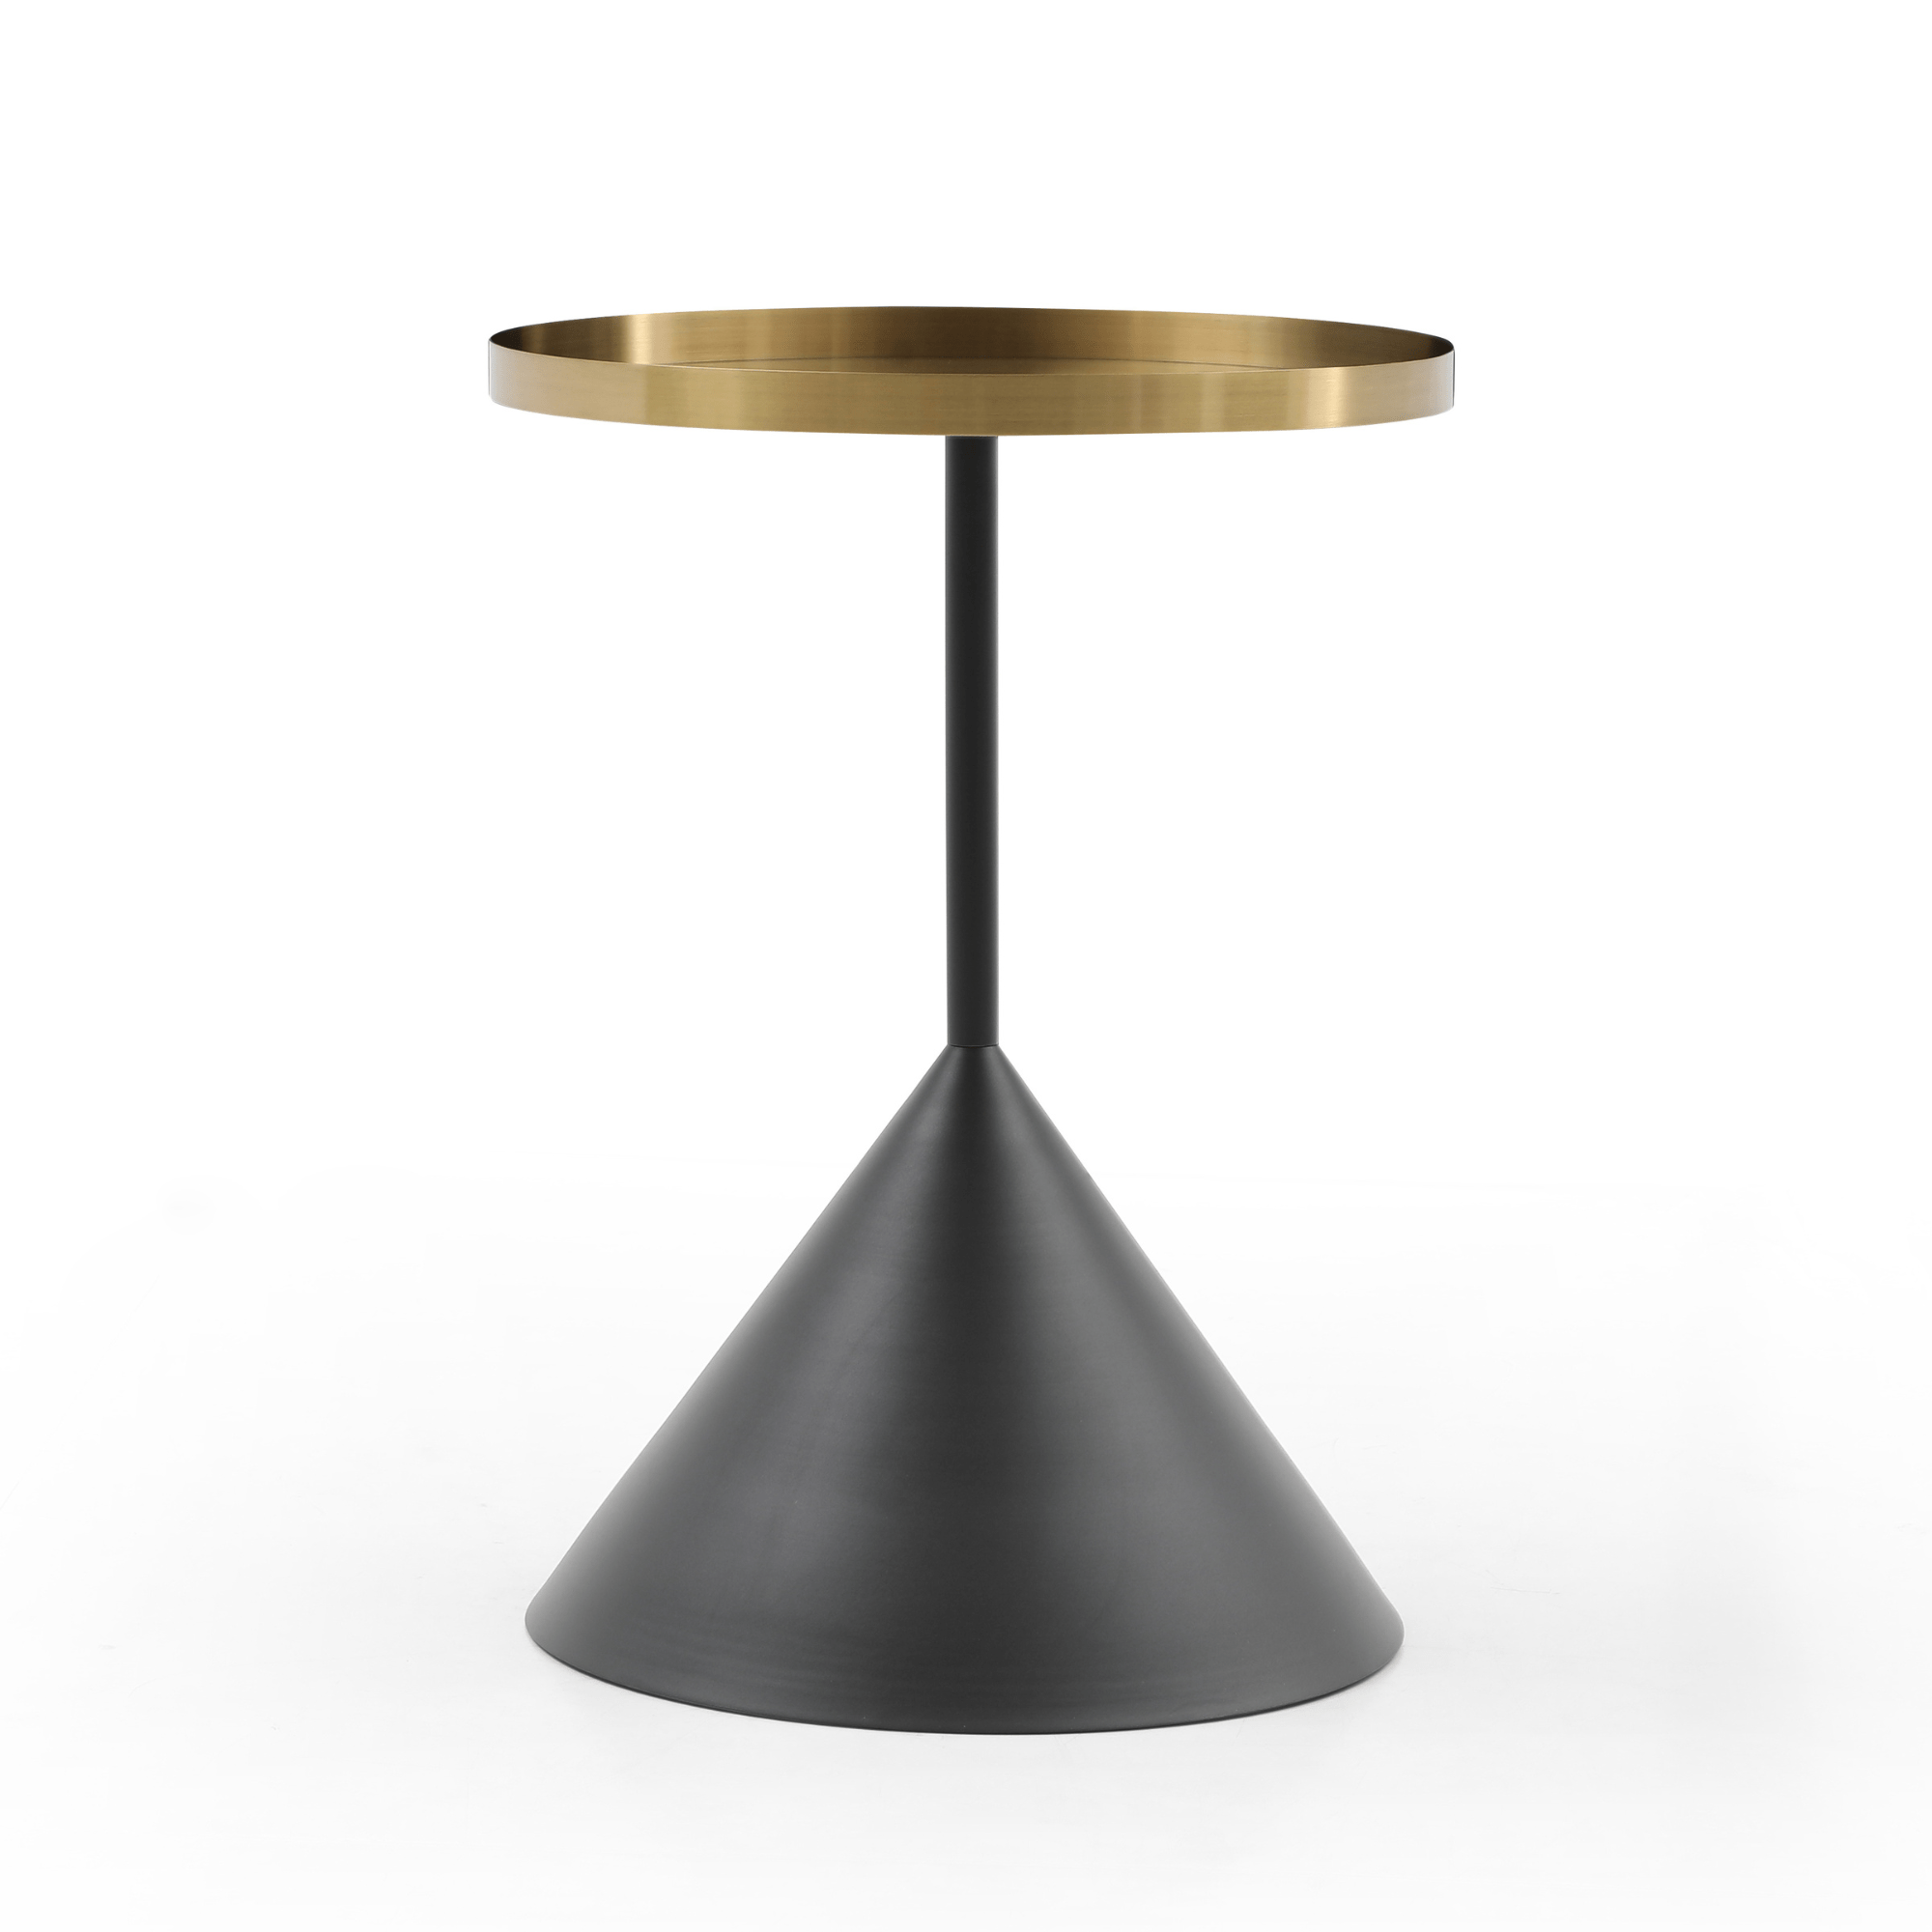 Seek & Ramble Bundles Lloyd Set of 2 Round Coffee Table & Side Table Metal Brushed Gold & Black Cone Base Bundle